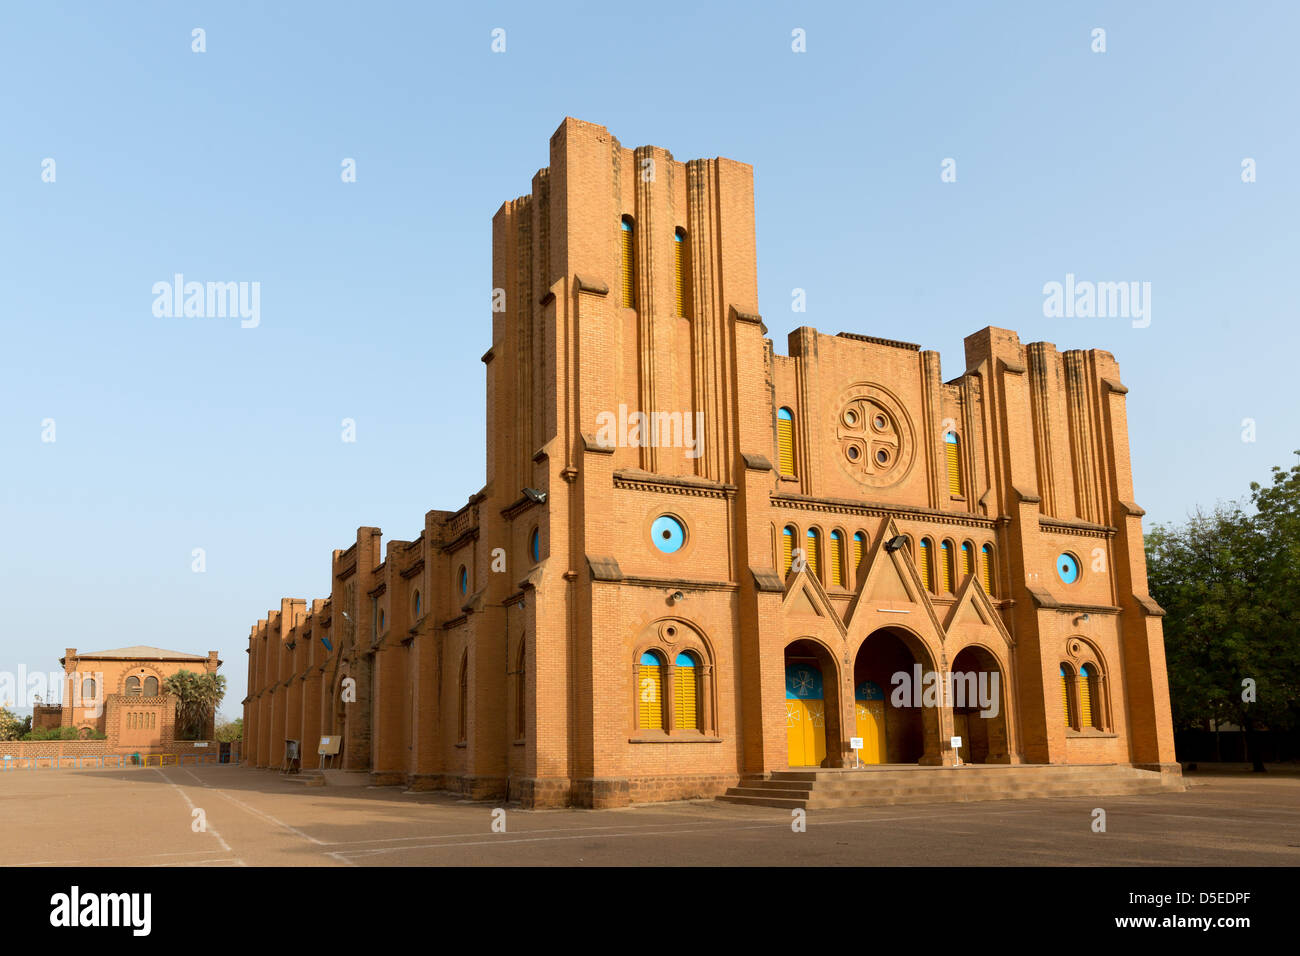 Die Ouagadougou-Kathedrale, erbaut in den 1930er Jahren gehört zu den größeren Kathedralen in Westafrika. Ouagadougou, Burkina Faso, Stockfoto